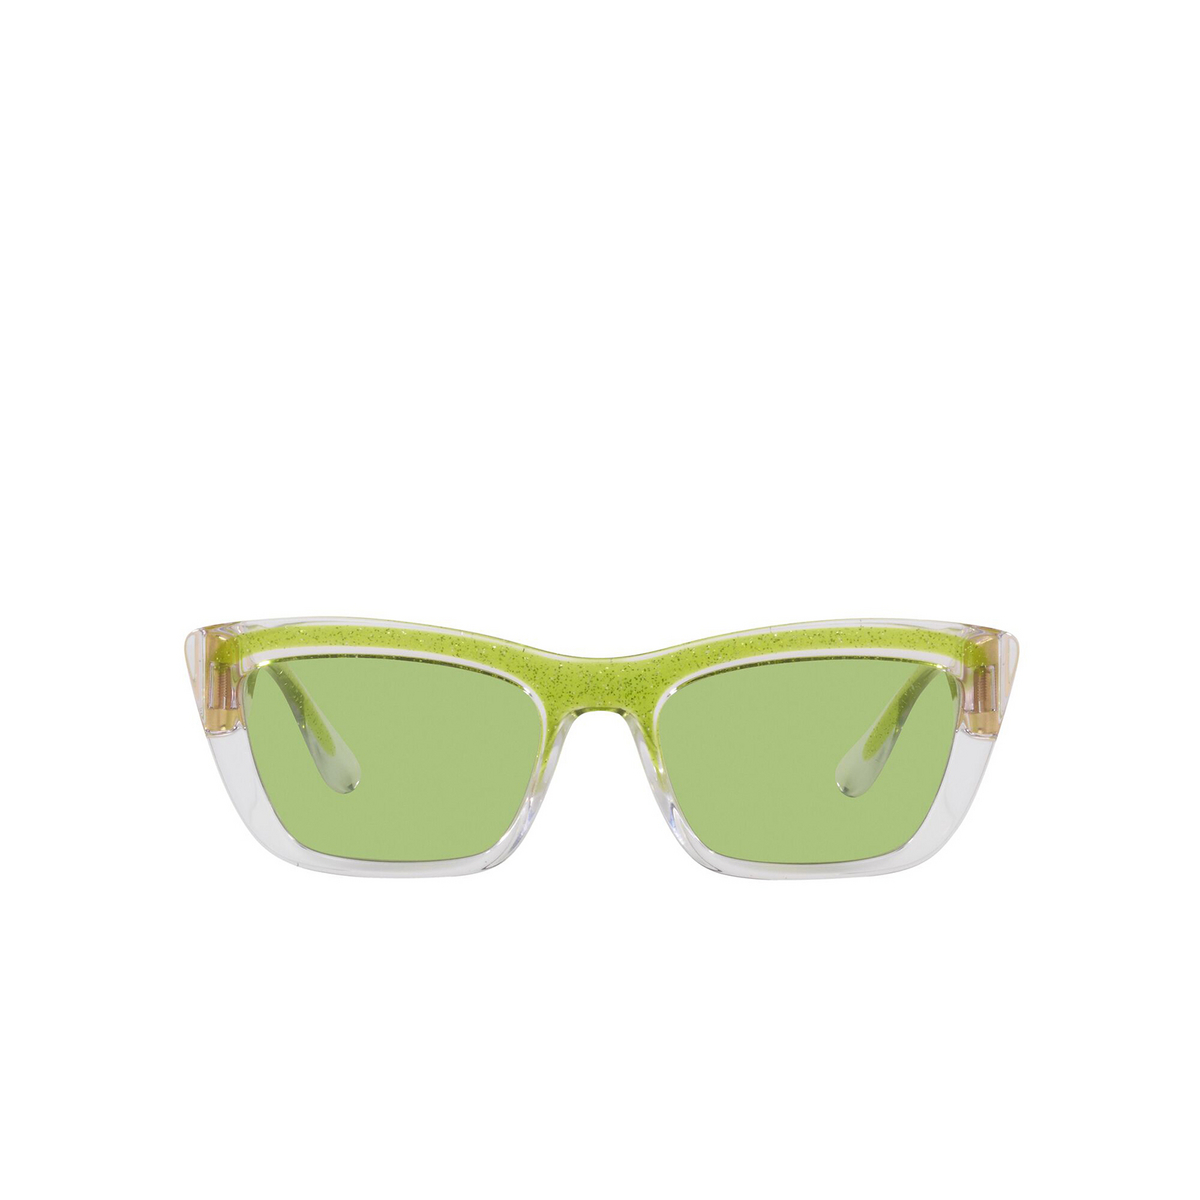 Dolce & Gabbana DG6171 Sunglasses 3354/2 Transparent/Green Glitter - front view